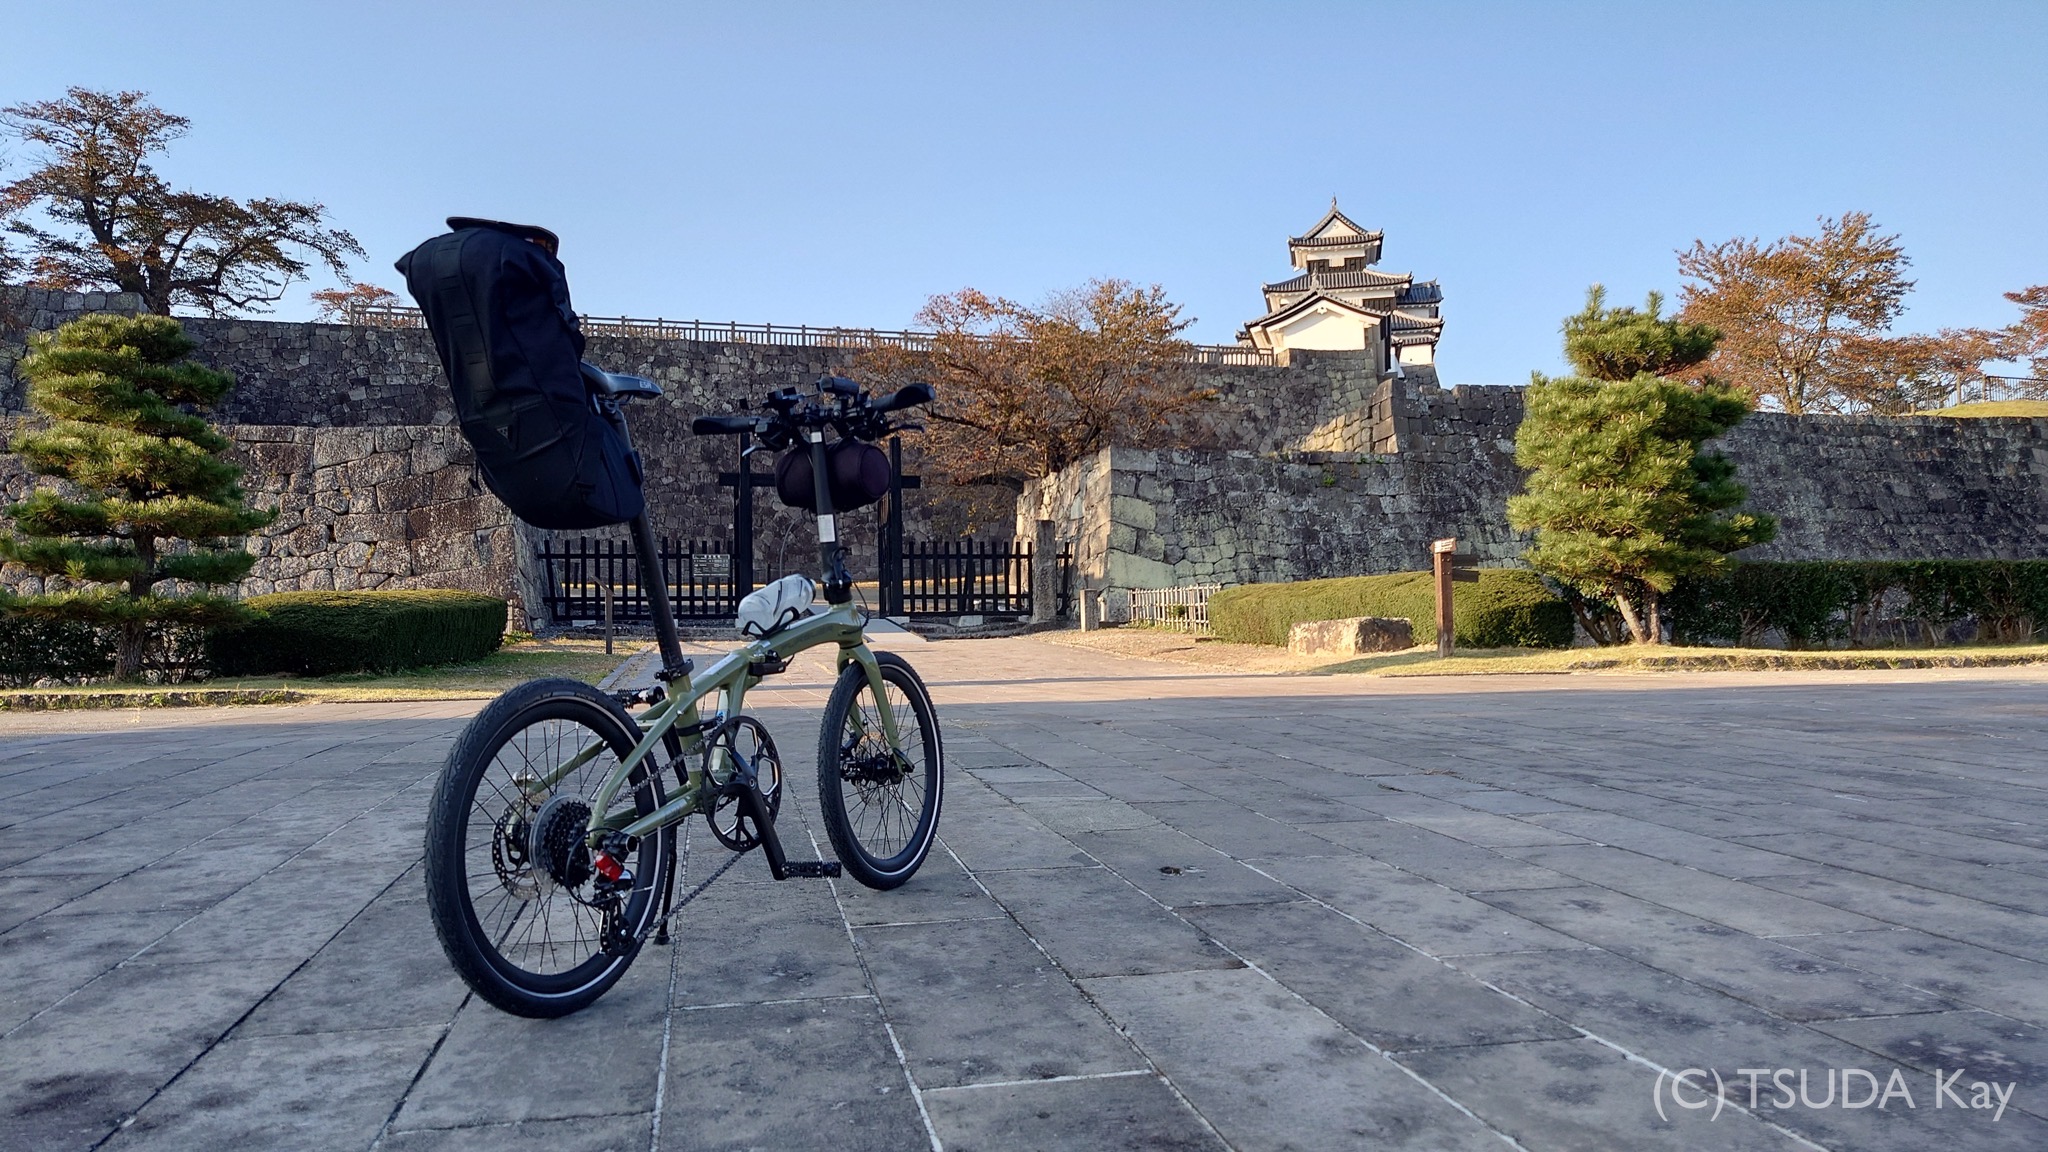 I cycled oshu kaido 007